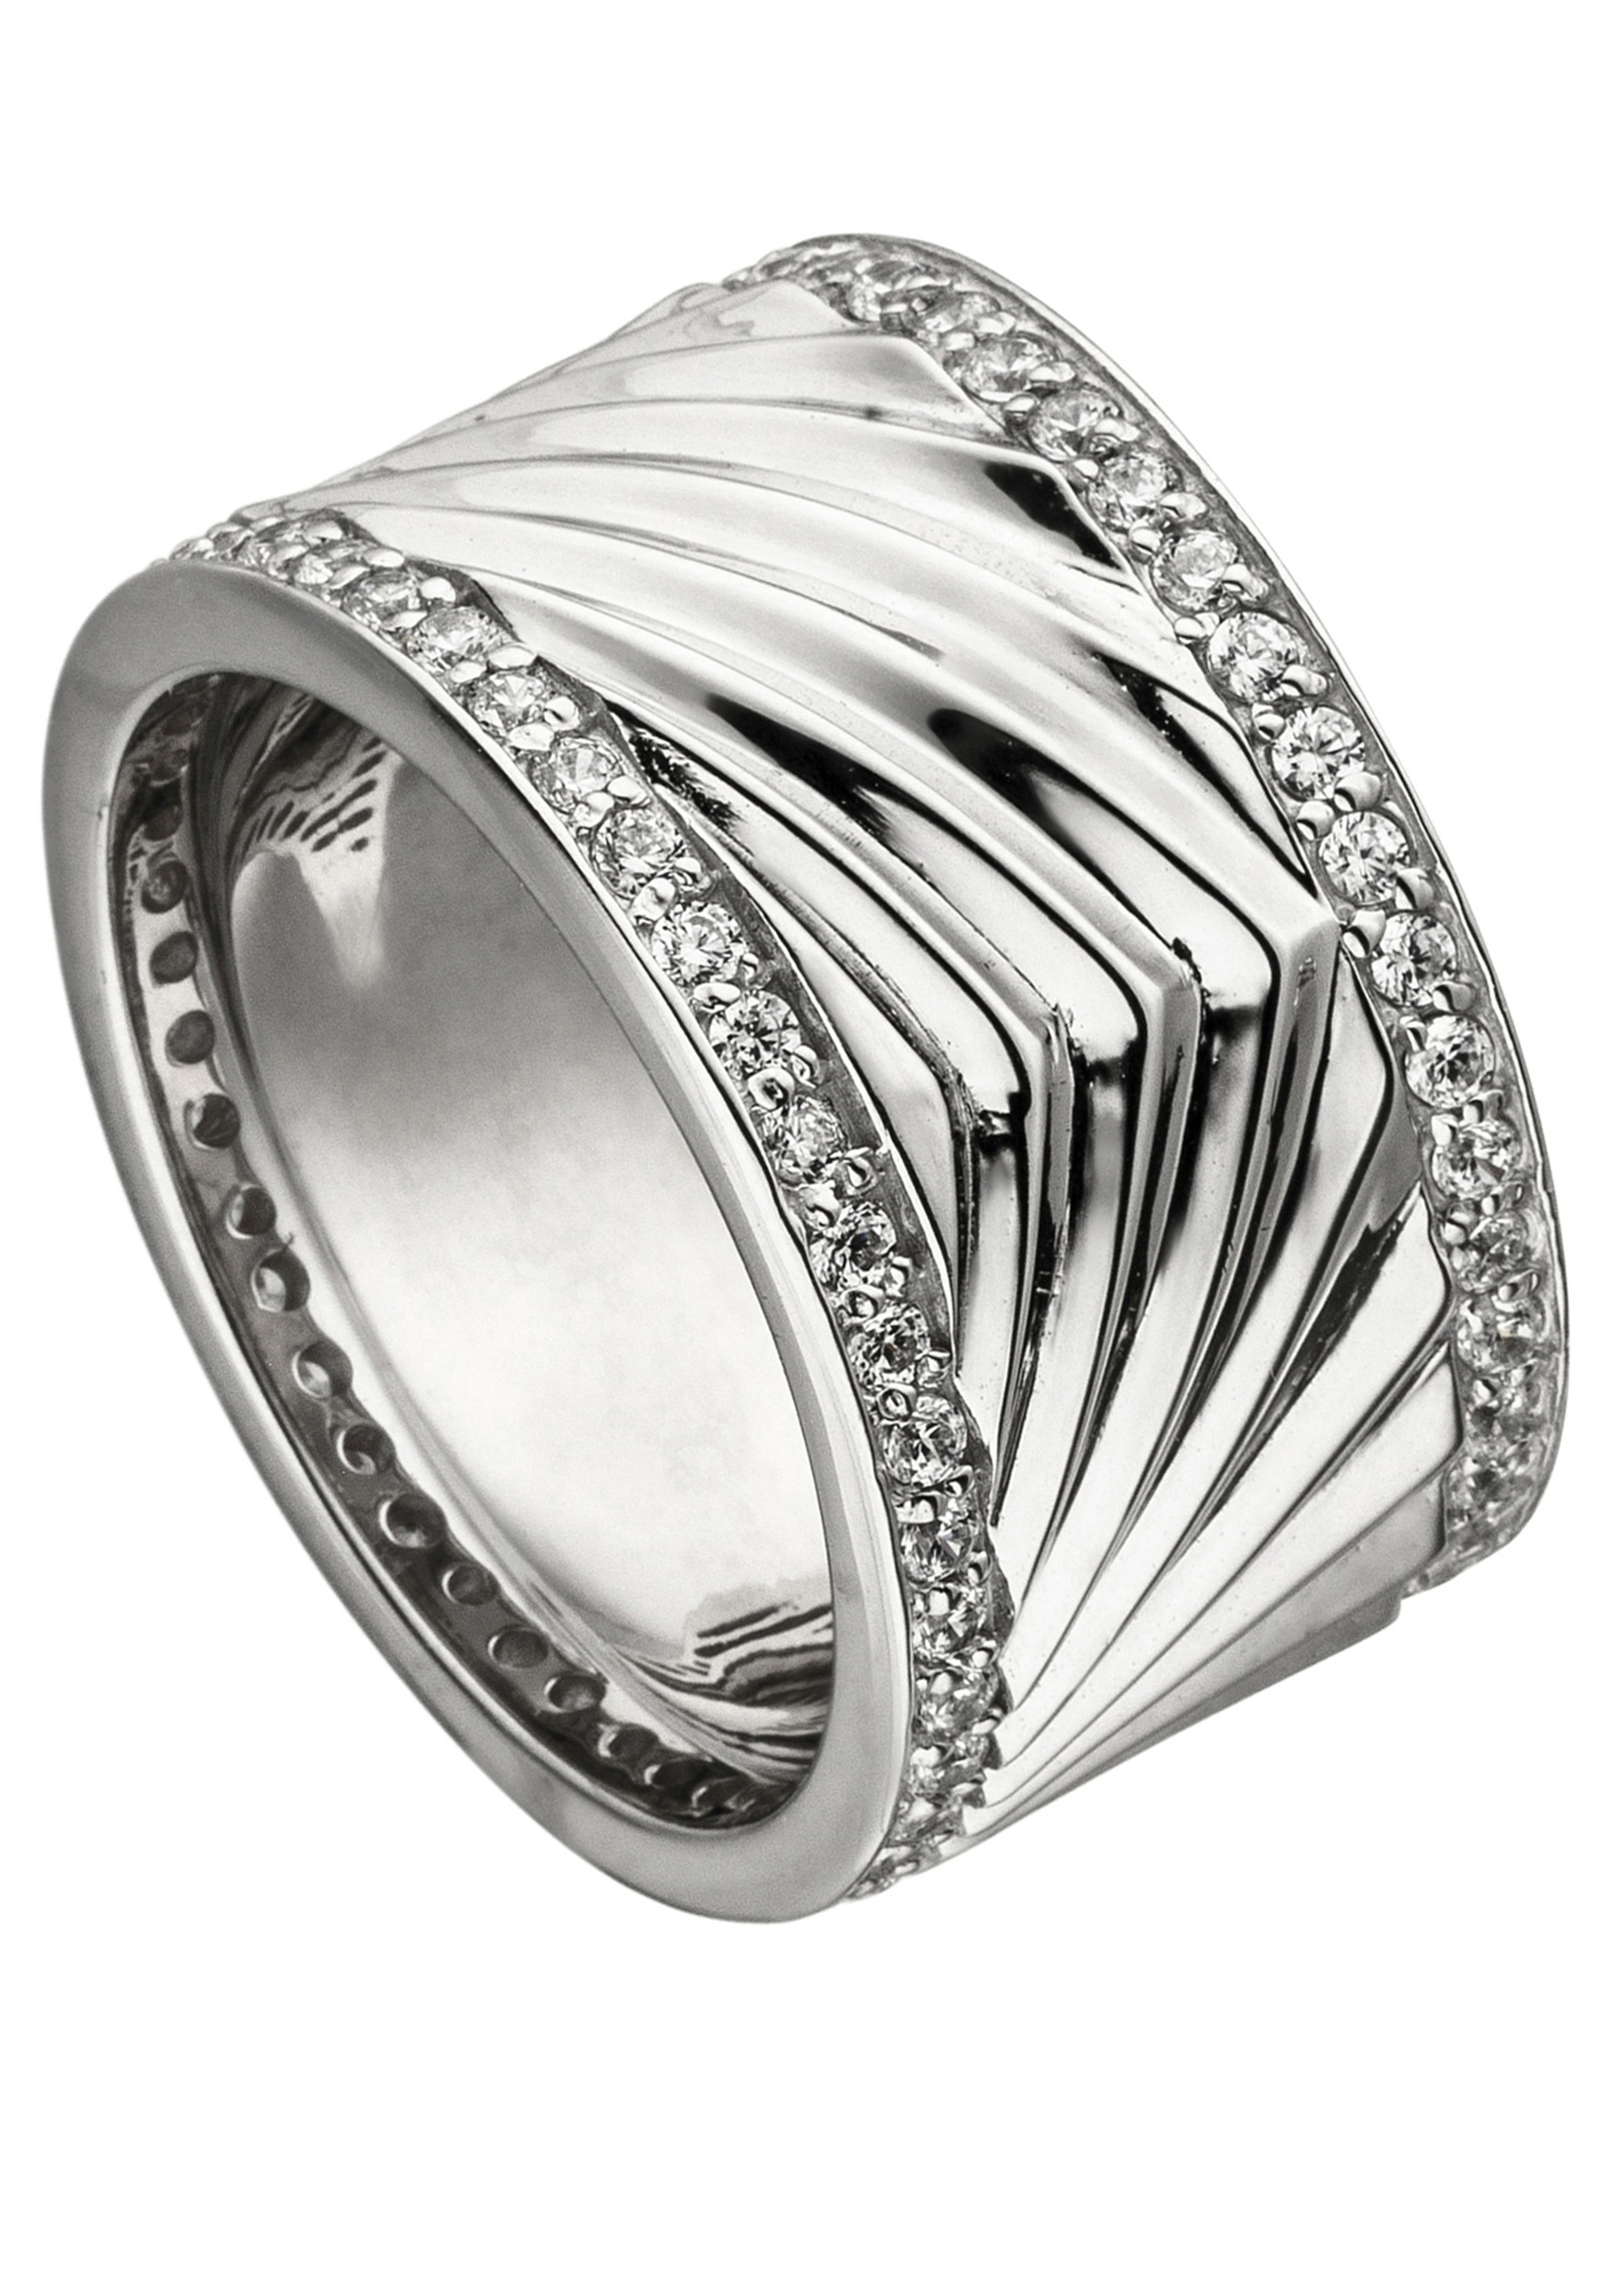 JOBO Fingerring »Breiter Ring mit Zirkonia«, 925 Silber kaufen | I\'m walking